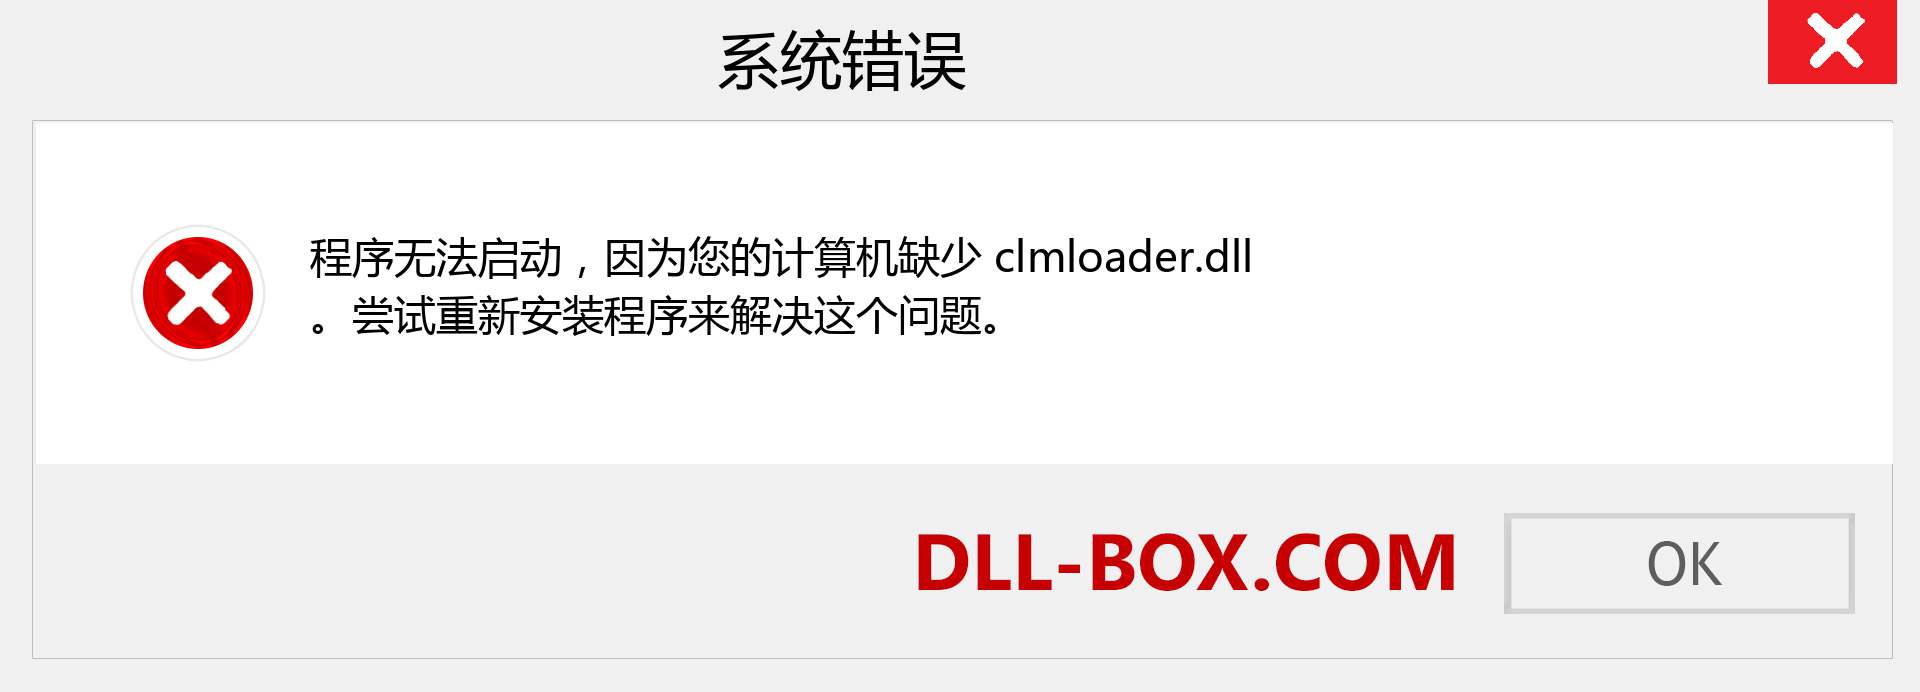 clmloader.dll 文件丢失？。 适用于 Windows 7、8、10 的下载 - 修复 Windows、照片、图像上的 clmloader dll 丢失错误